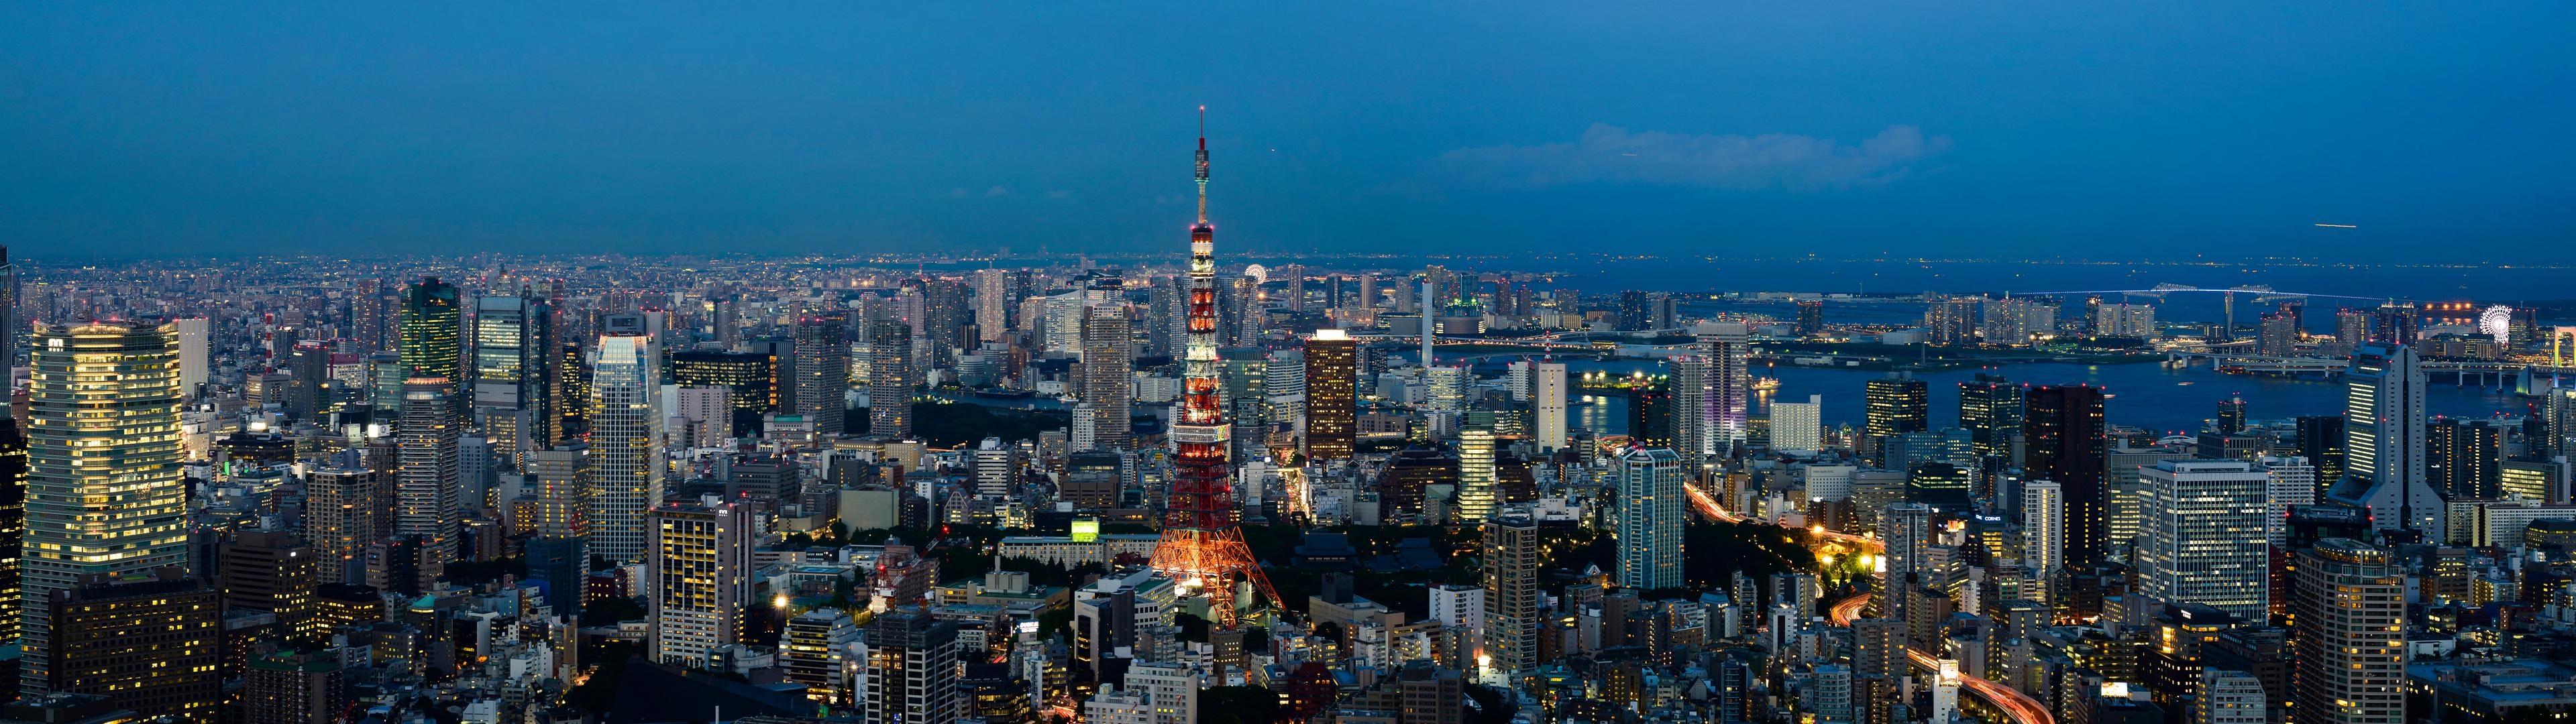 Japan Skyline, Tokyo cityscape, Modern architecture, Asian metropolis, 3840x1080 Dual Screen Desktop